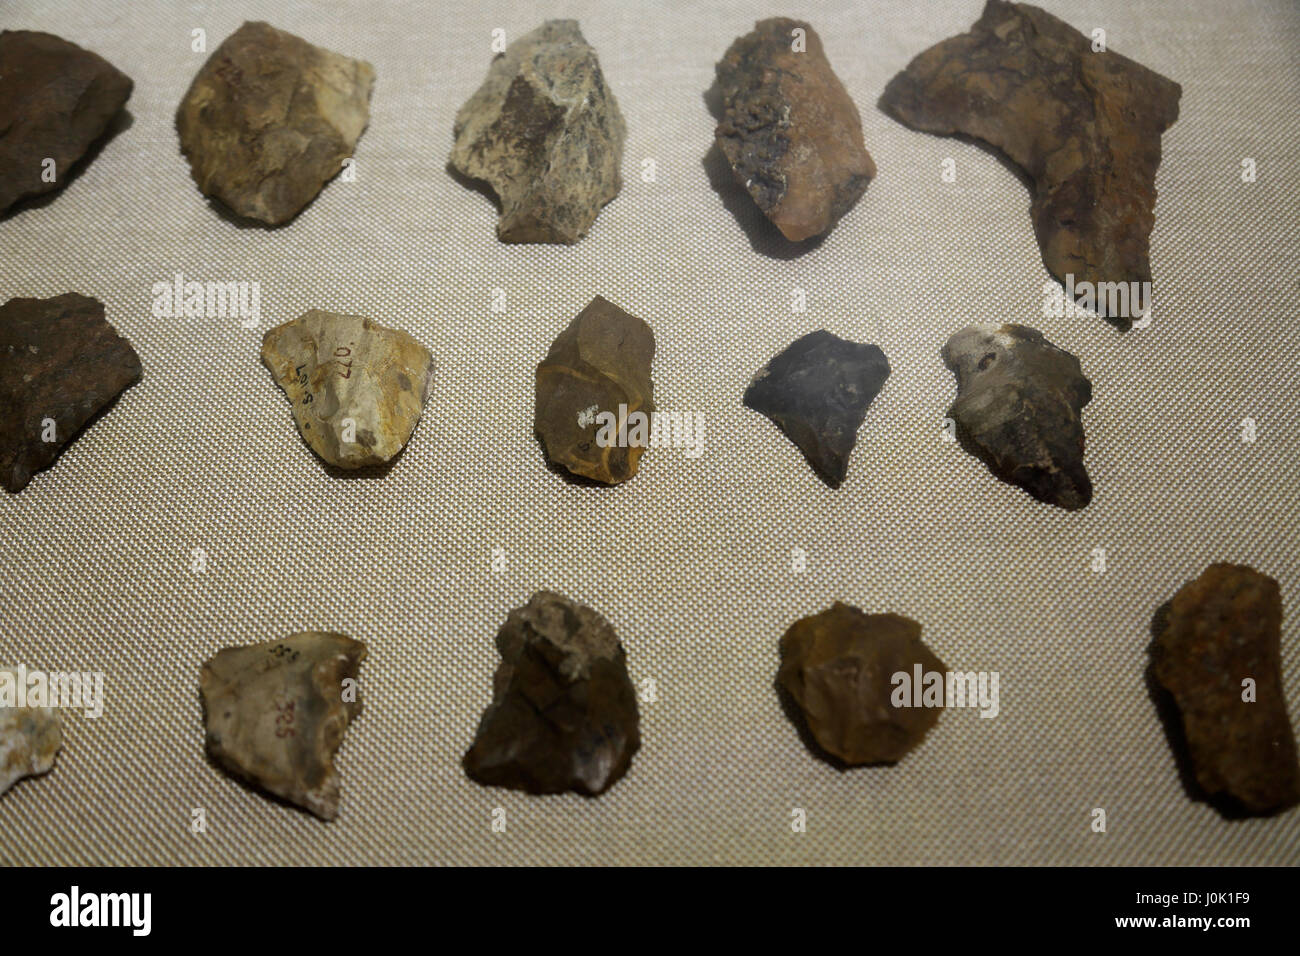 https://c8.alamy.com/comp/J0K1F9/colombo-sri-lanka-national-museum-middle-paleolithic-stone-tools-collection-J0K1F9.jpg